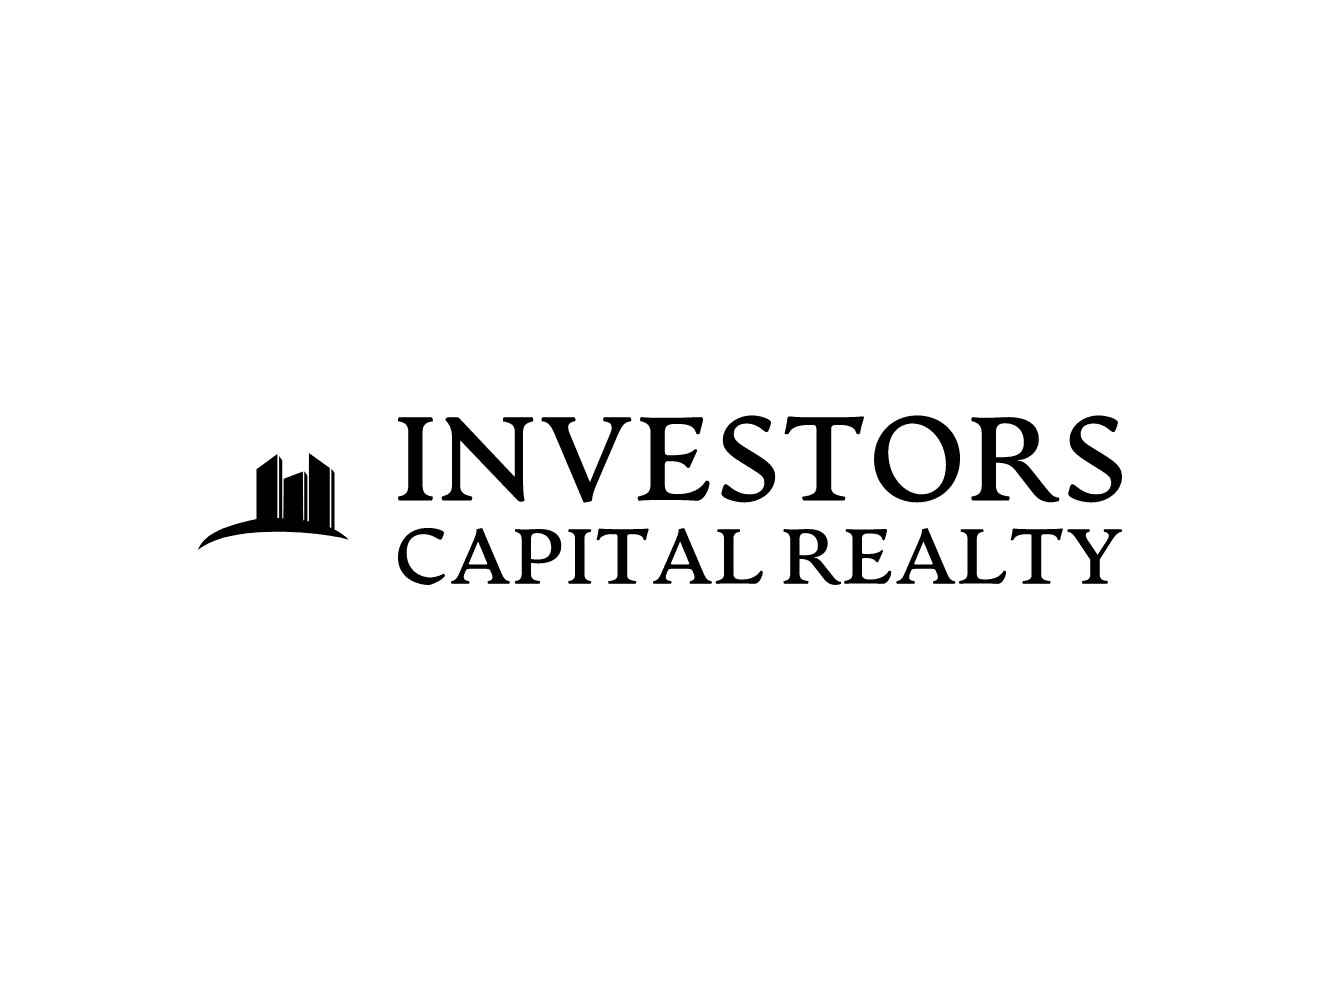 Investors Capital Realty